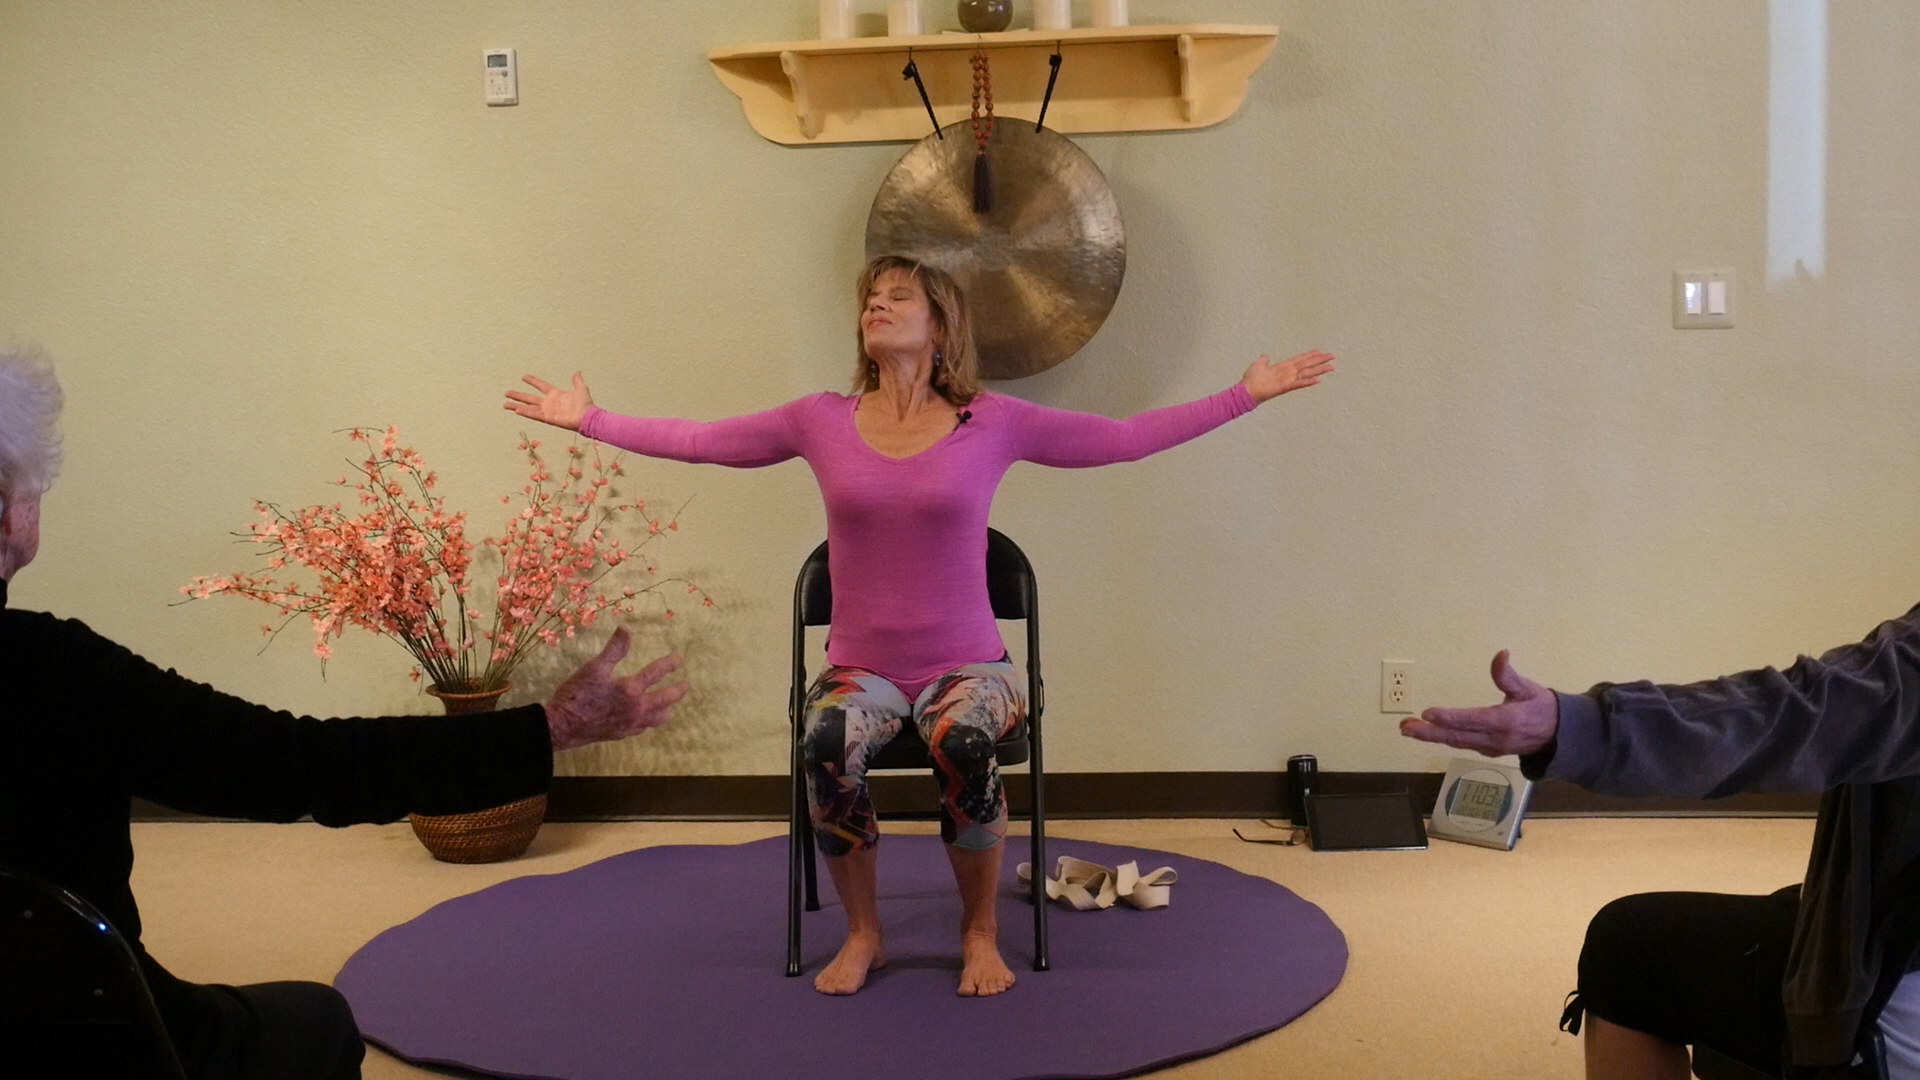 sherry zak chair yoga